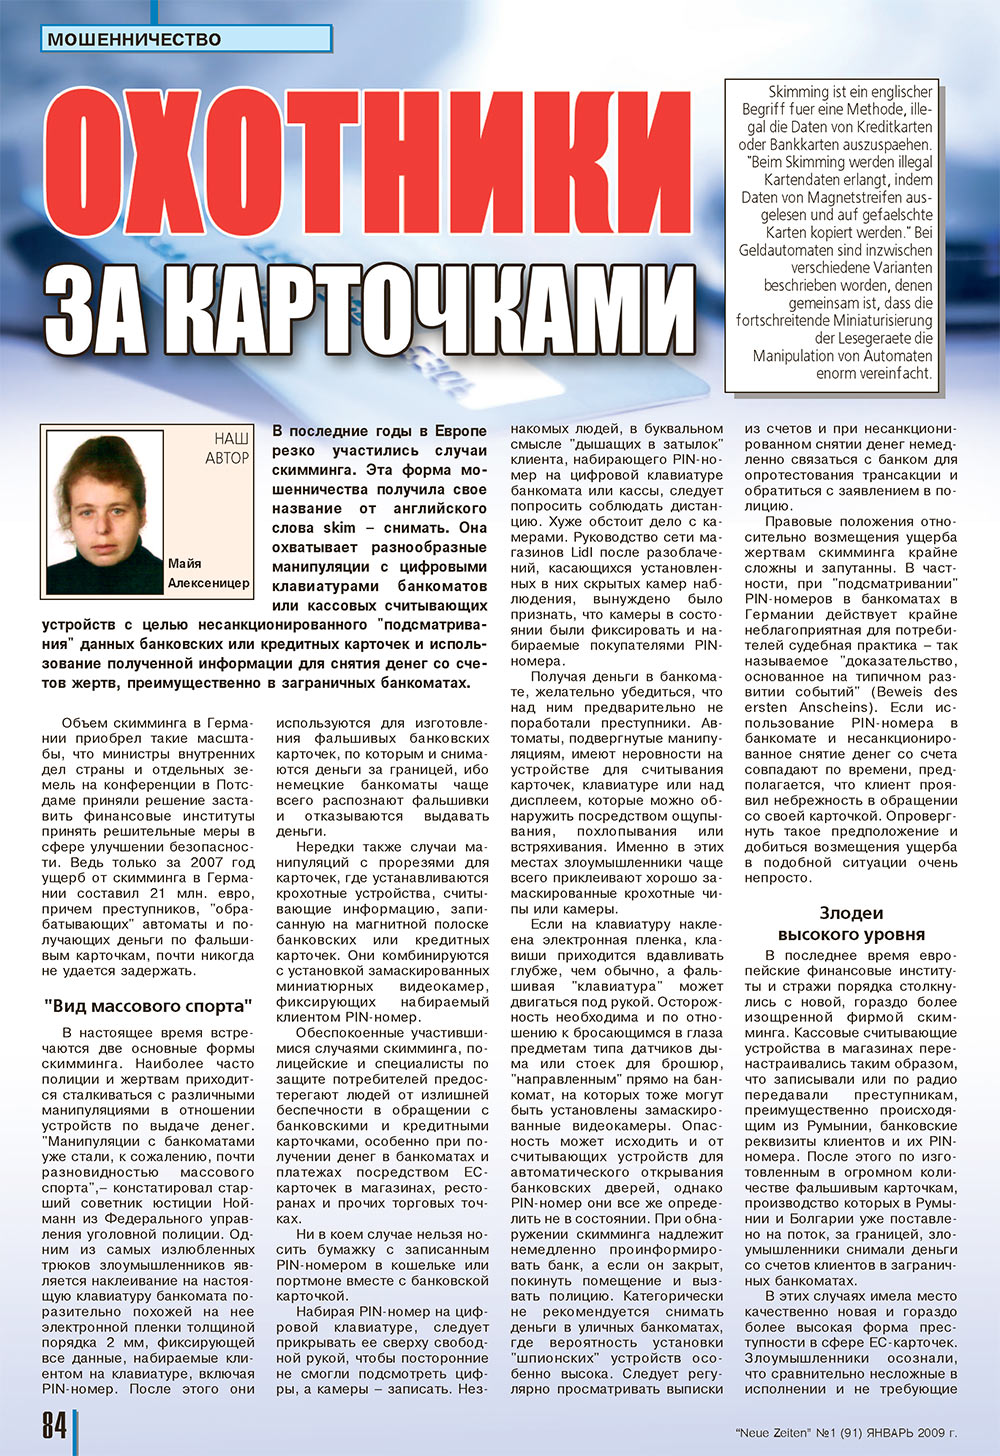 Neue Zeiten (журнал). 2009 год, номер 1, стр. 84